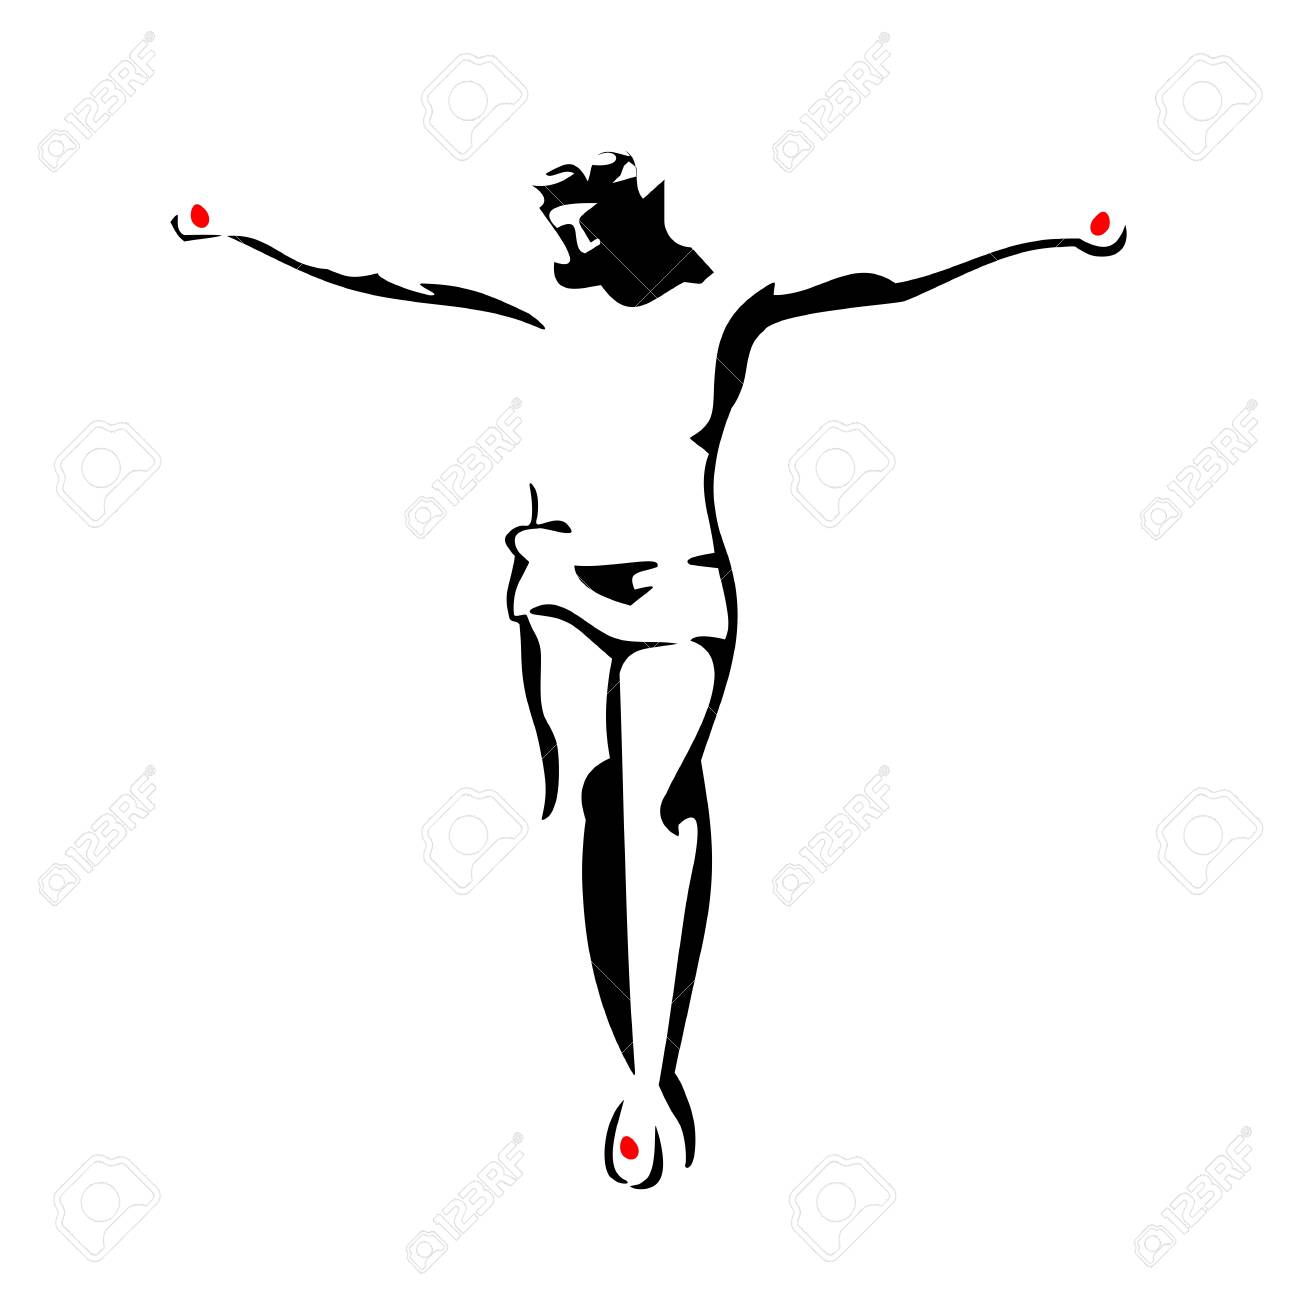 Jesus Christ crucified. Vector black illustration on white background..